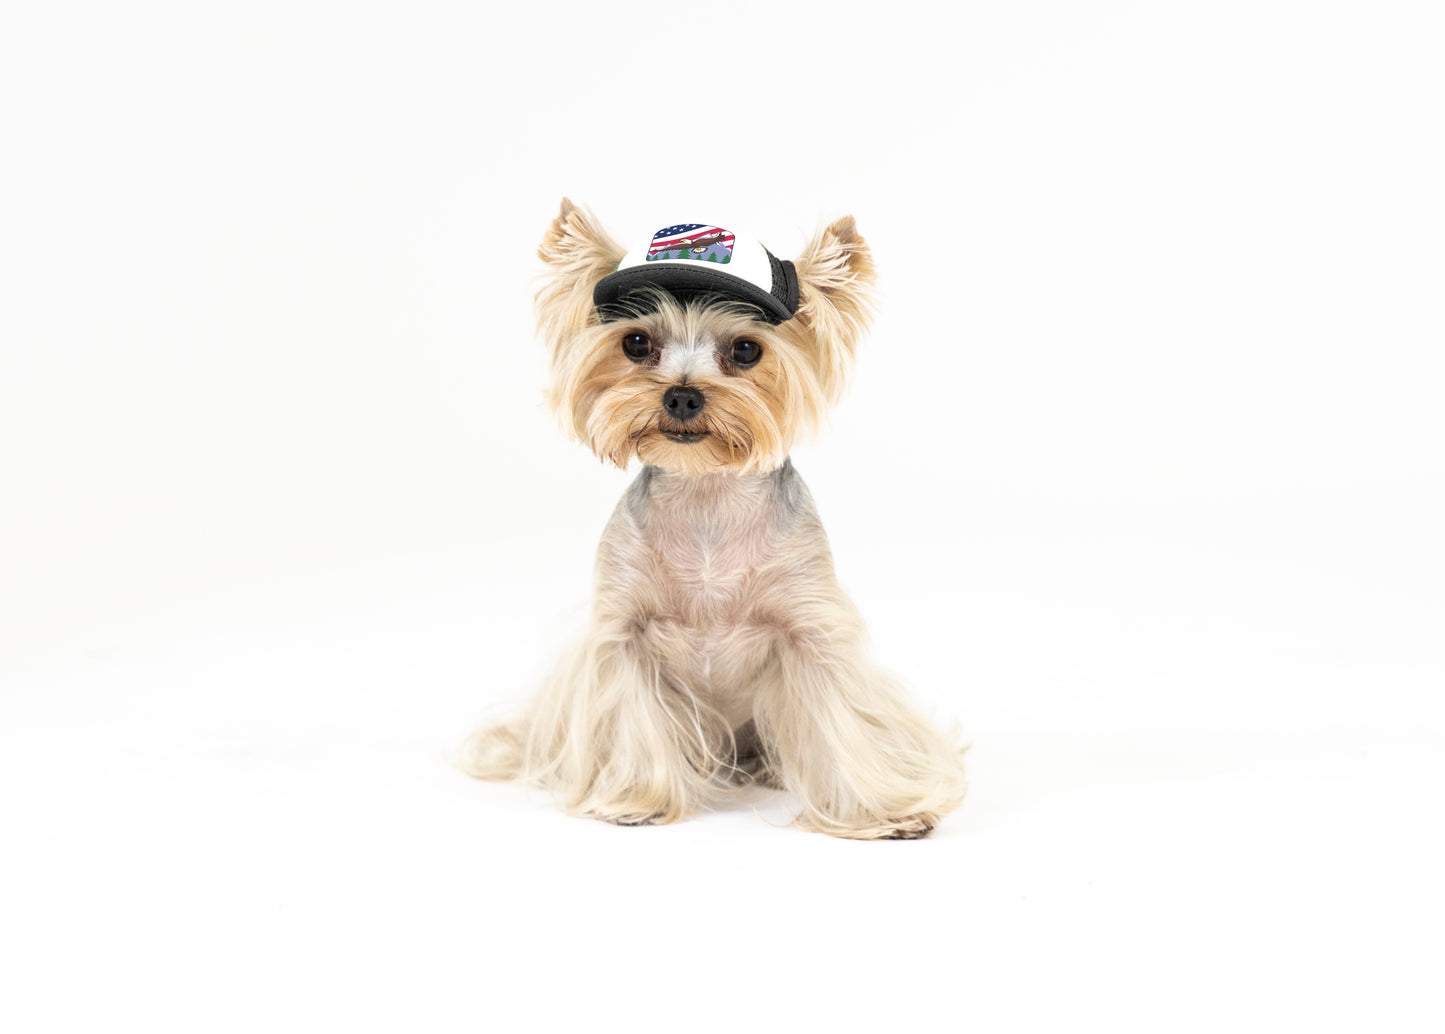 PupLid USA Designs | Size Tiny Dog Hat